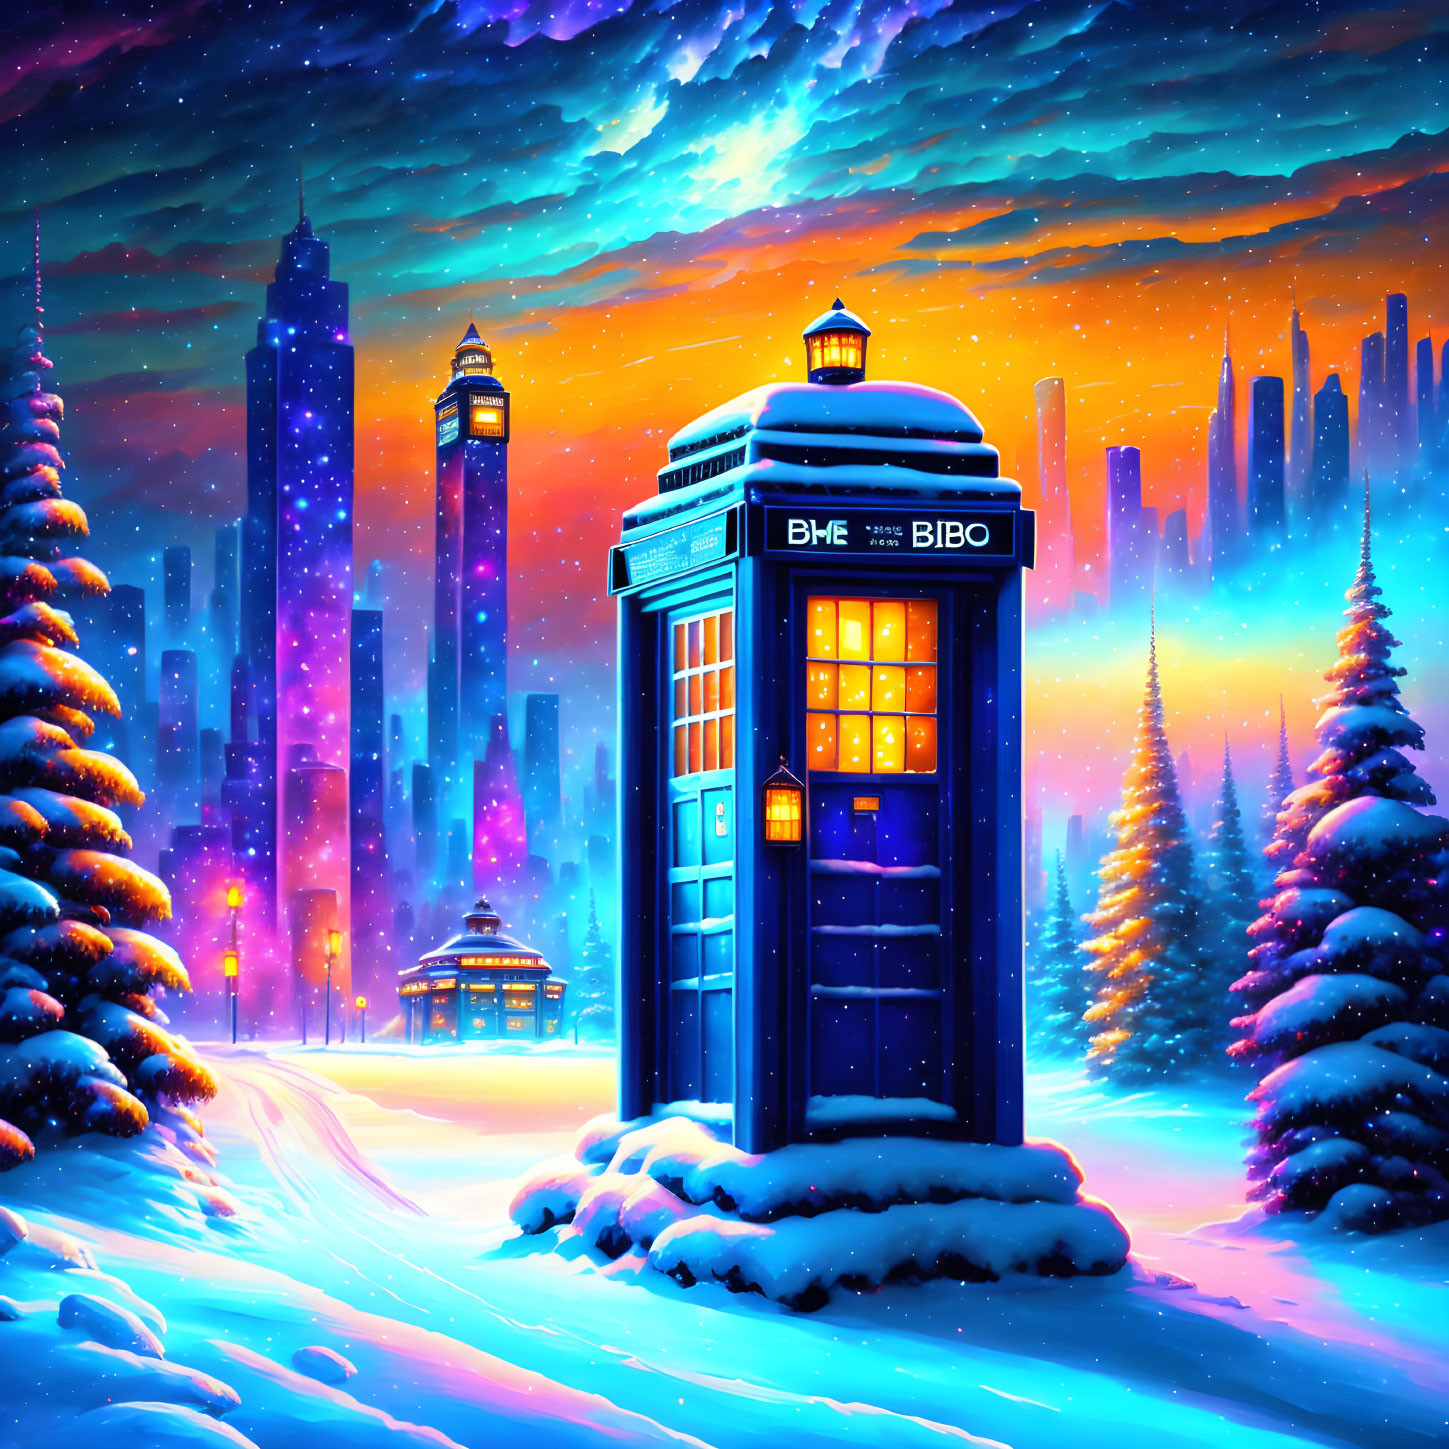 Digital Artwork: Blue Police Box in Snowy Landscape with Futuristic City & Auroras